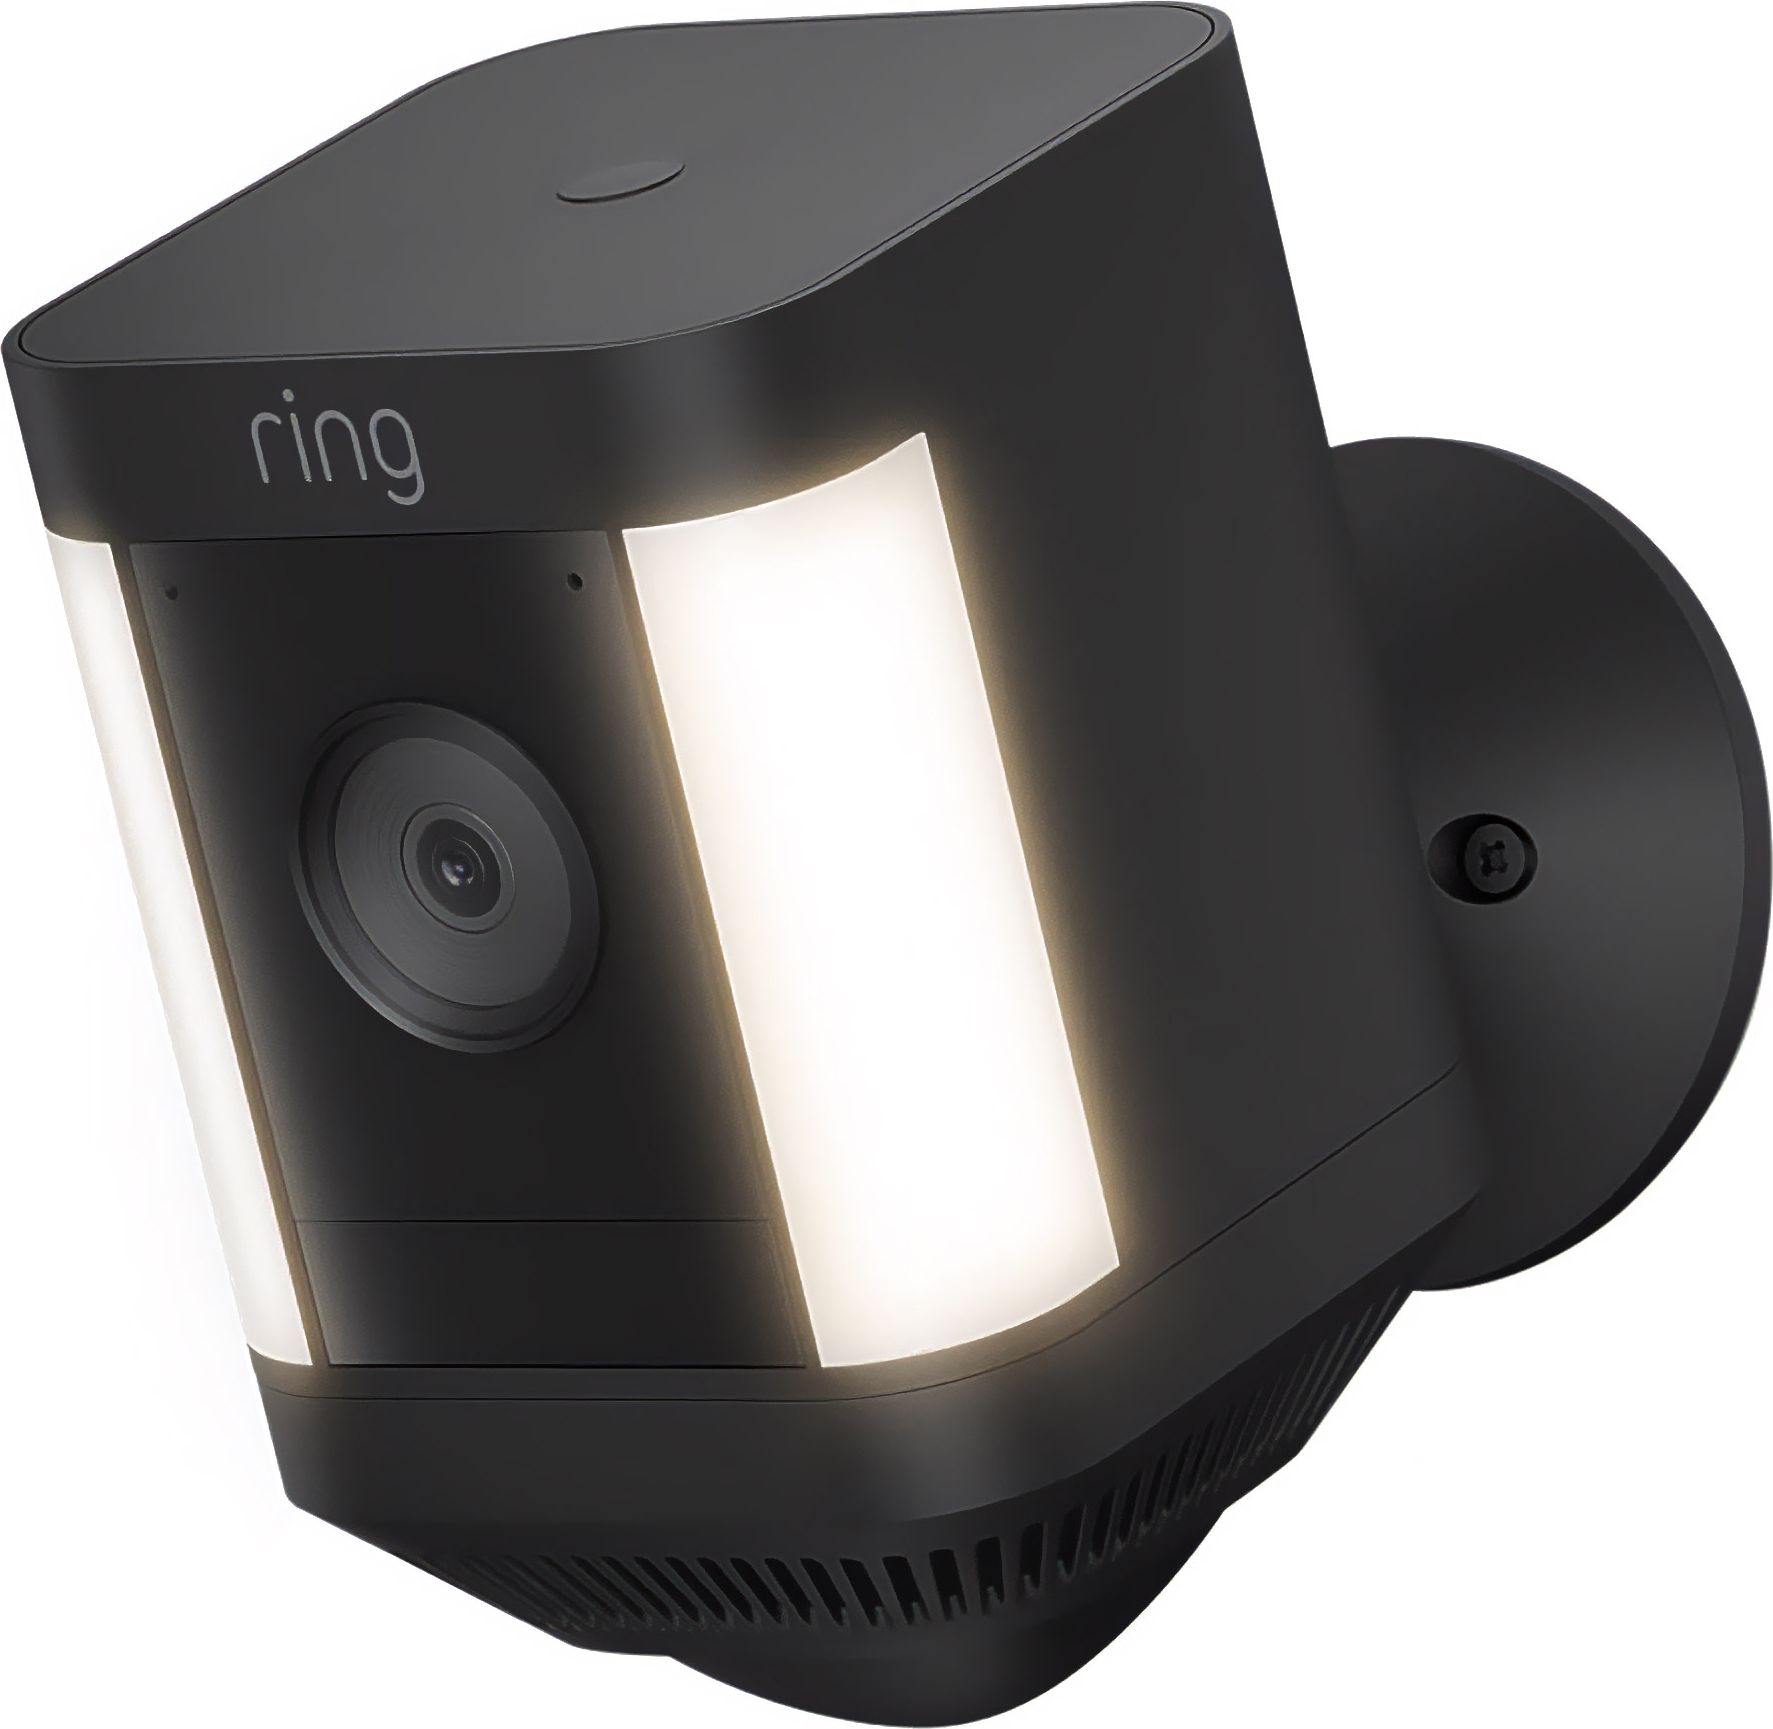 Ring Battery Powered Spotlight Cam Plus Full HD 1080p Smart Home Security Camera - Black, Black